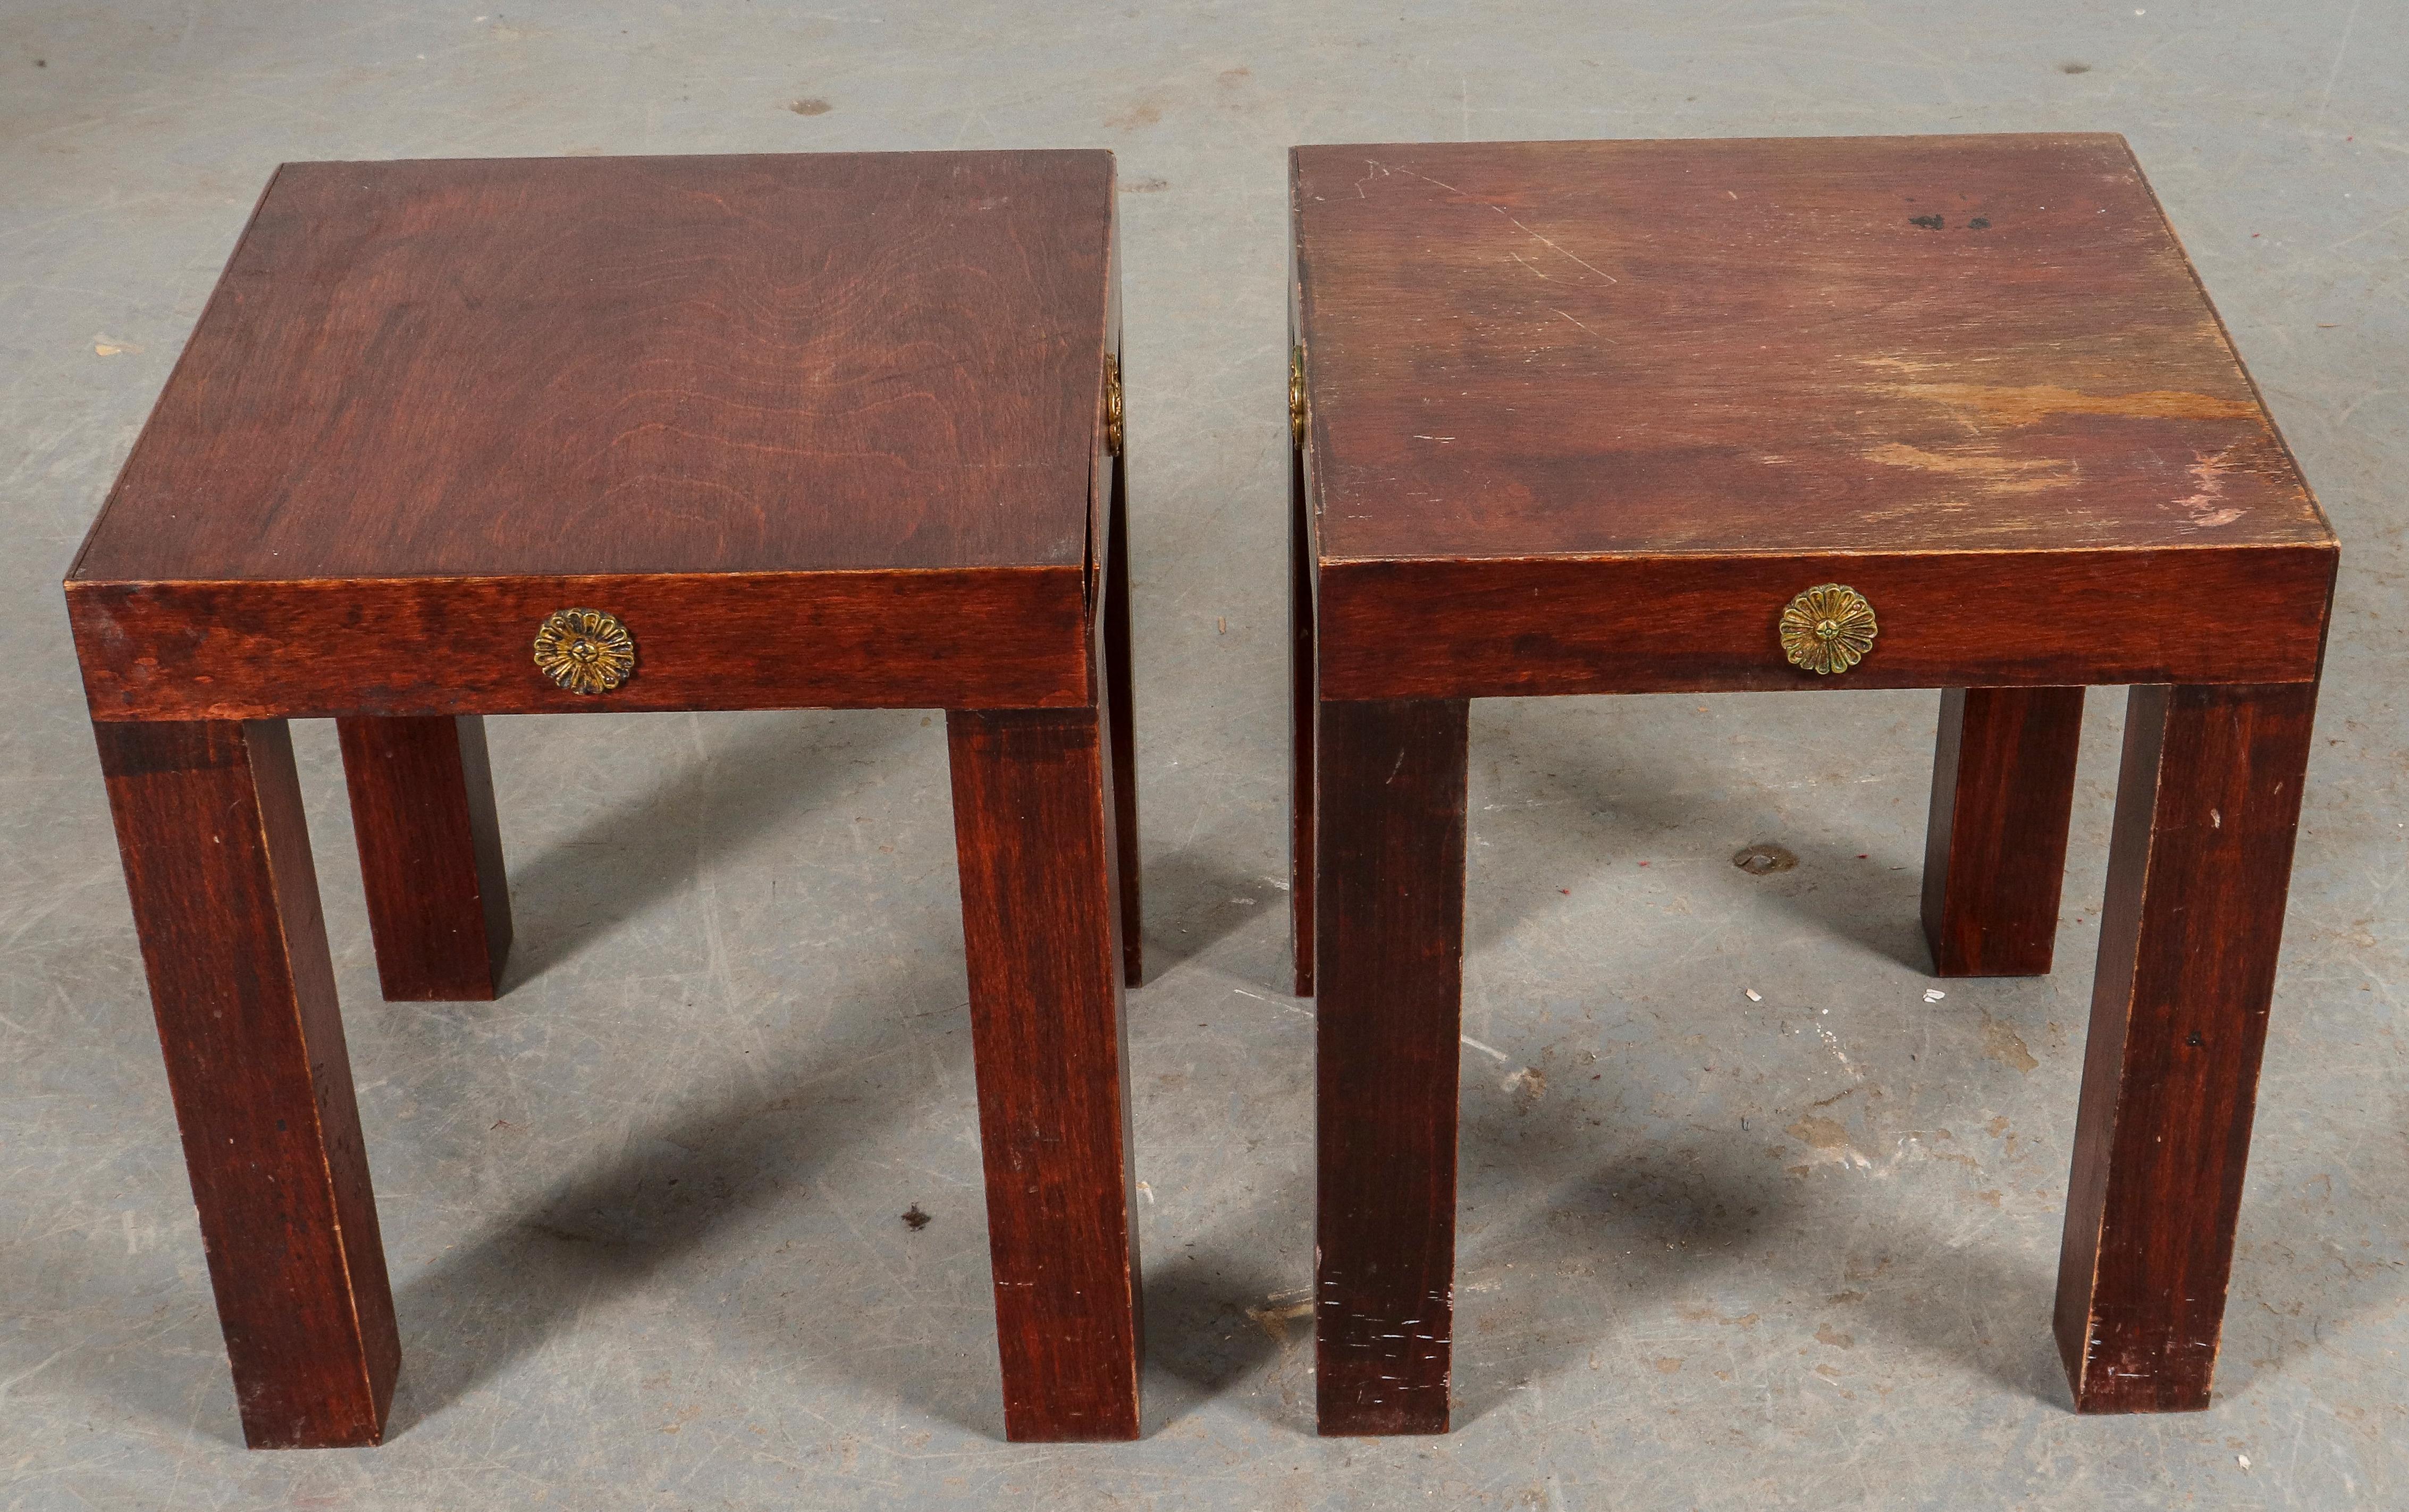 Empire Revival Diminutive Pedestal Tables, Pair For Sale 1